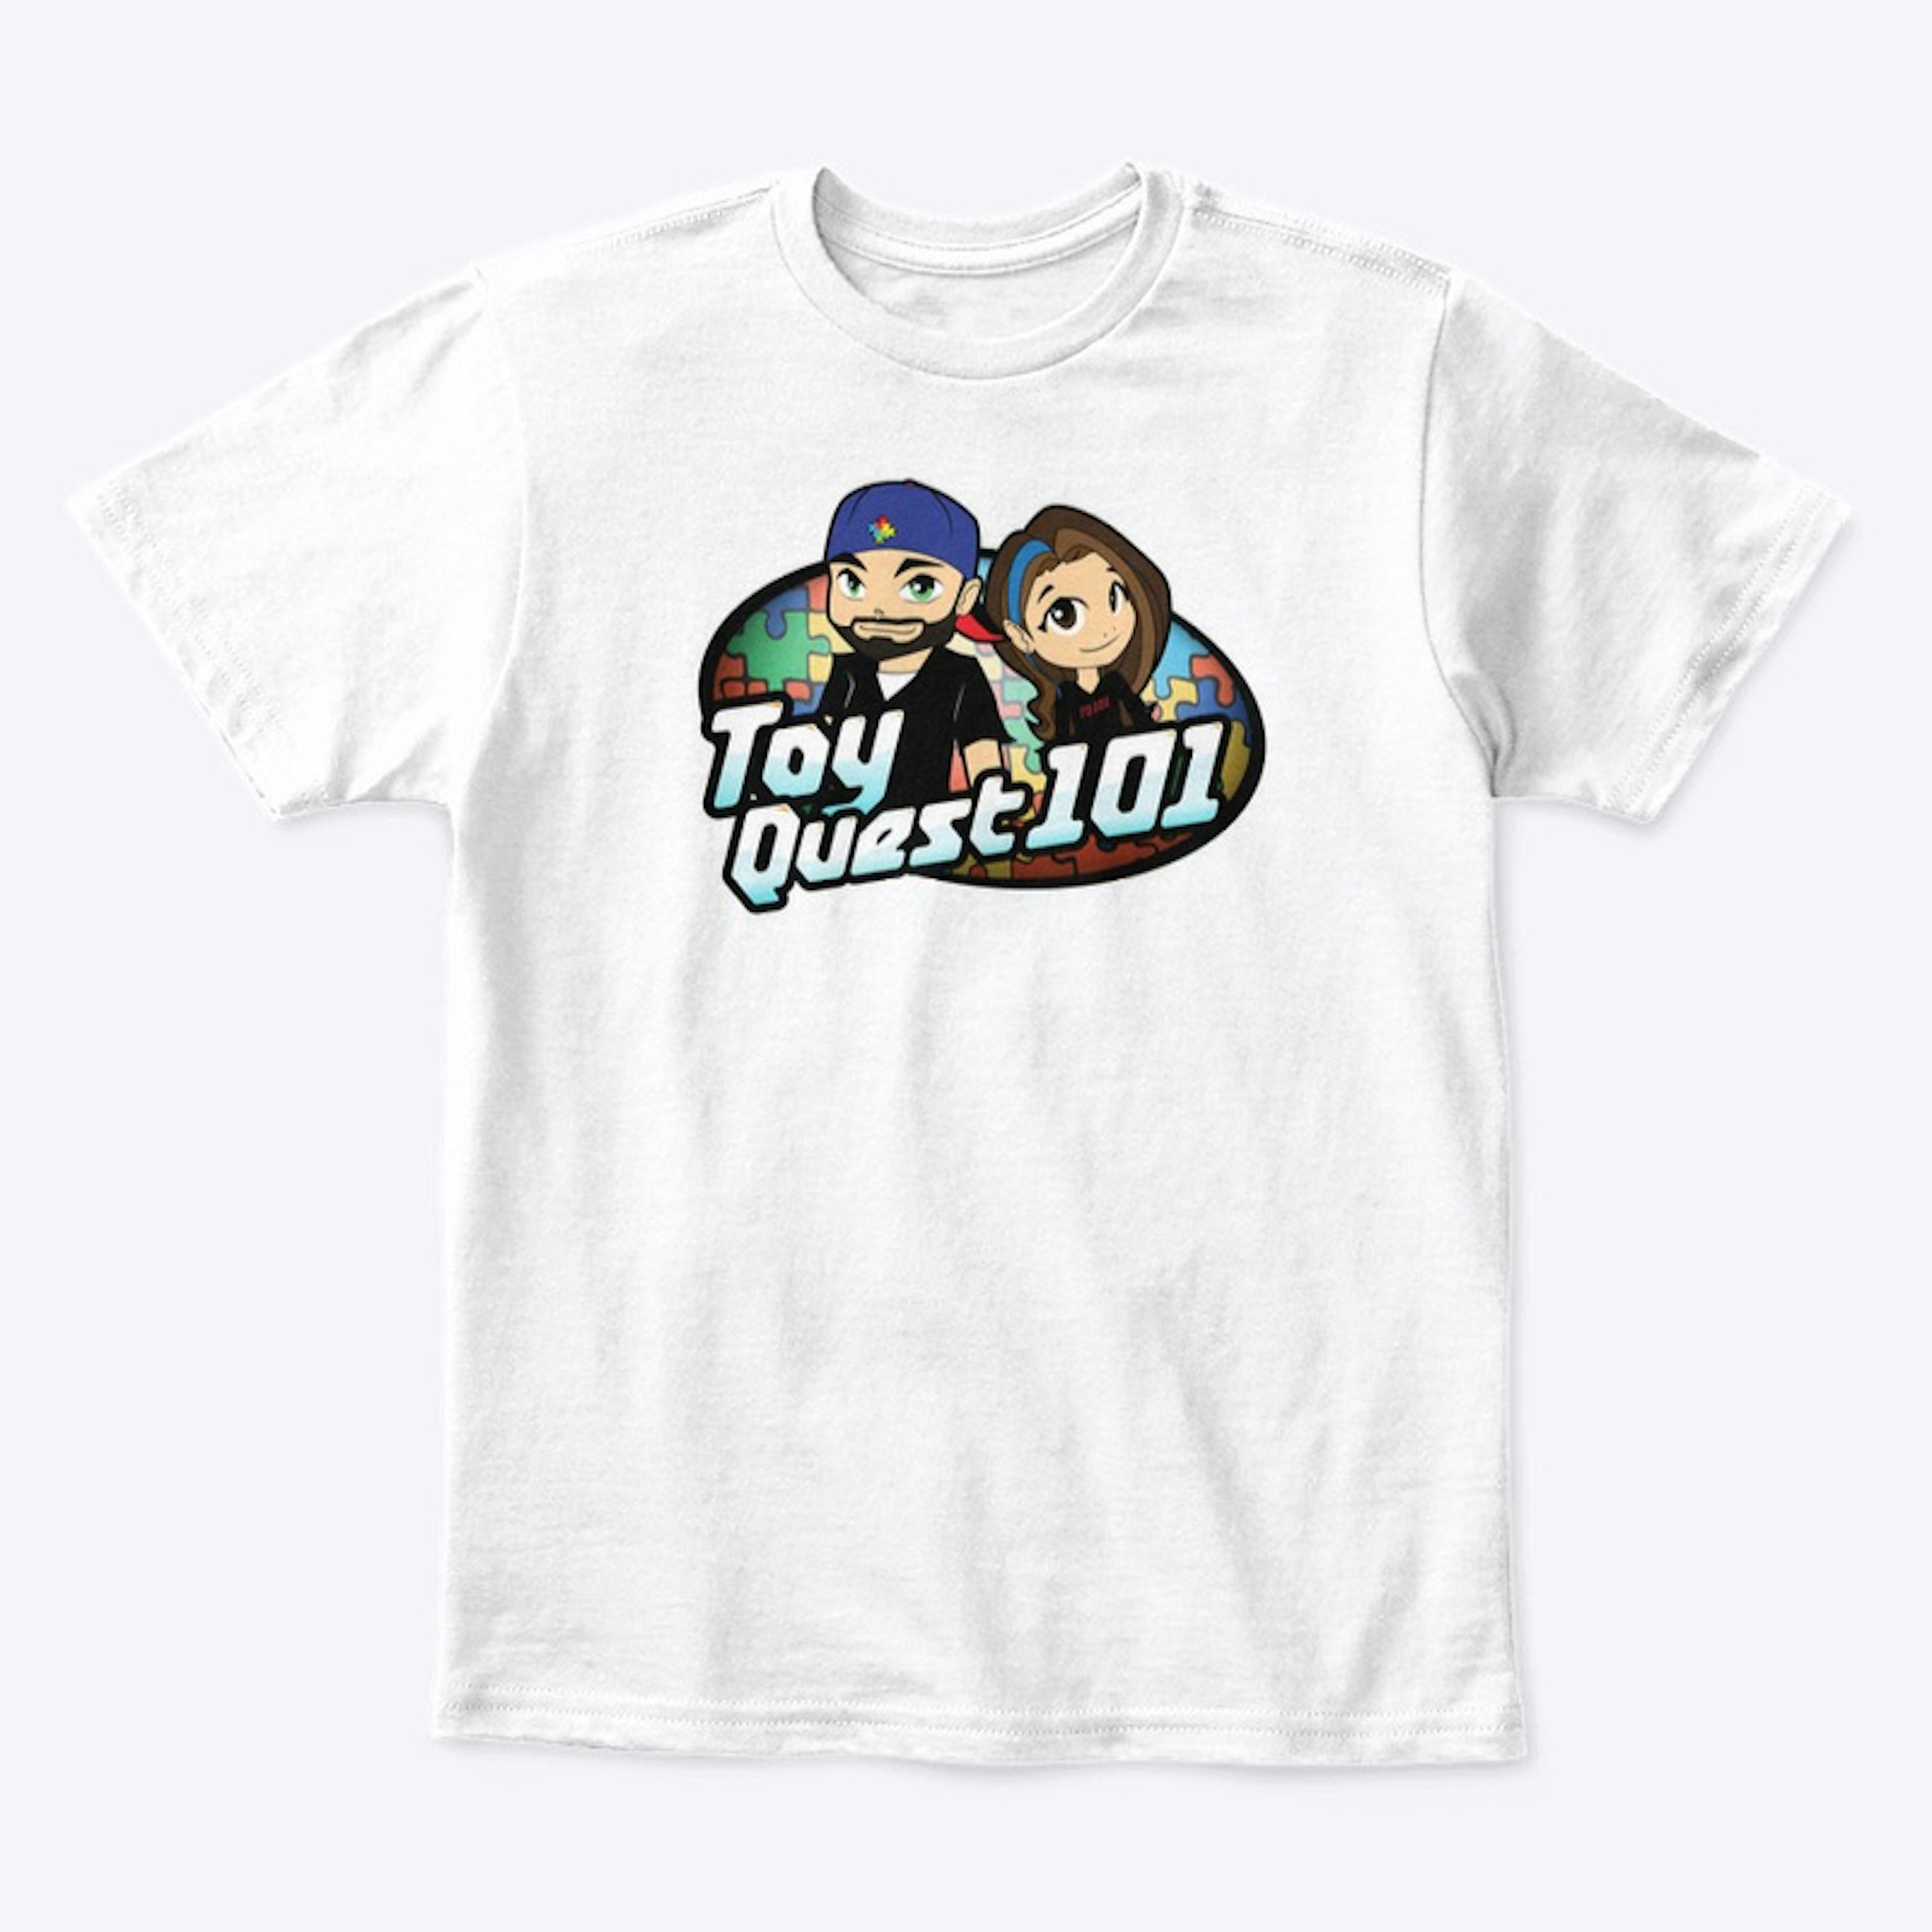 Toyquest101 Kids T-Shirt